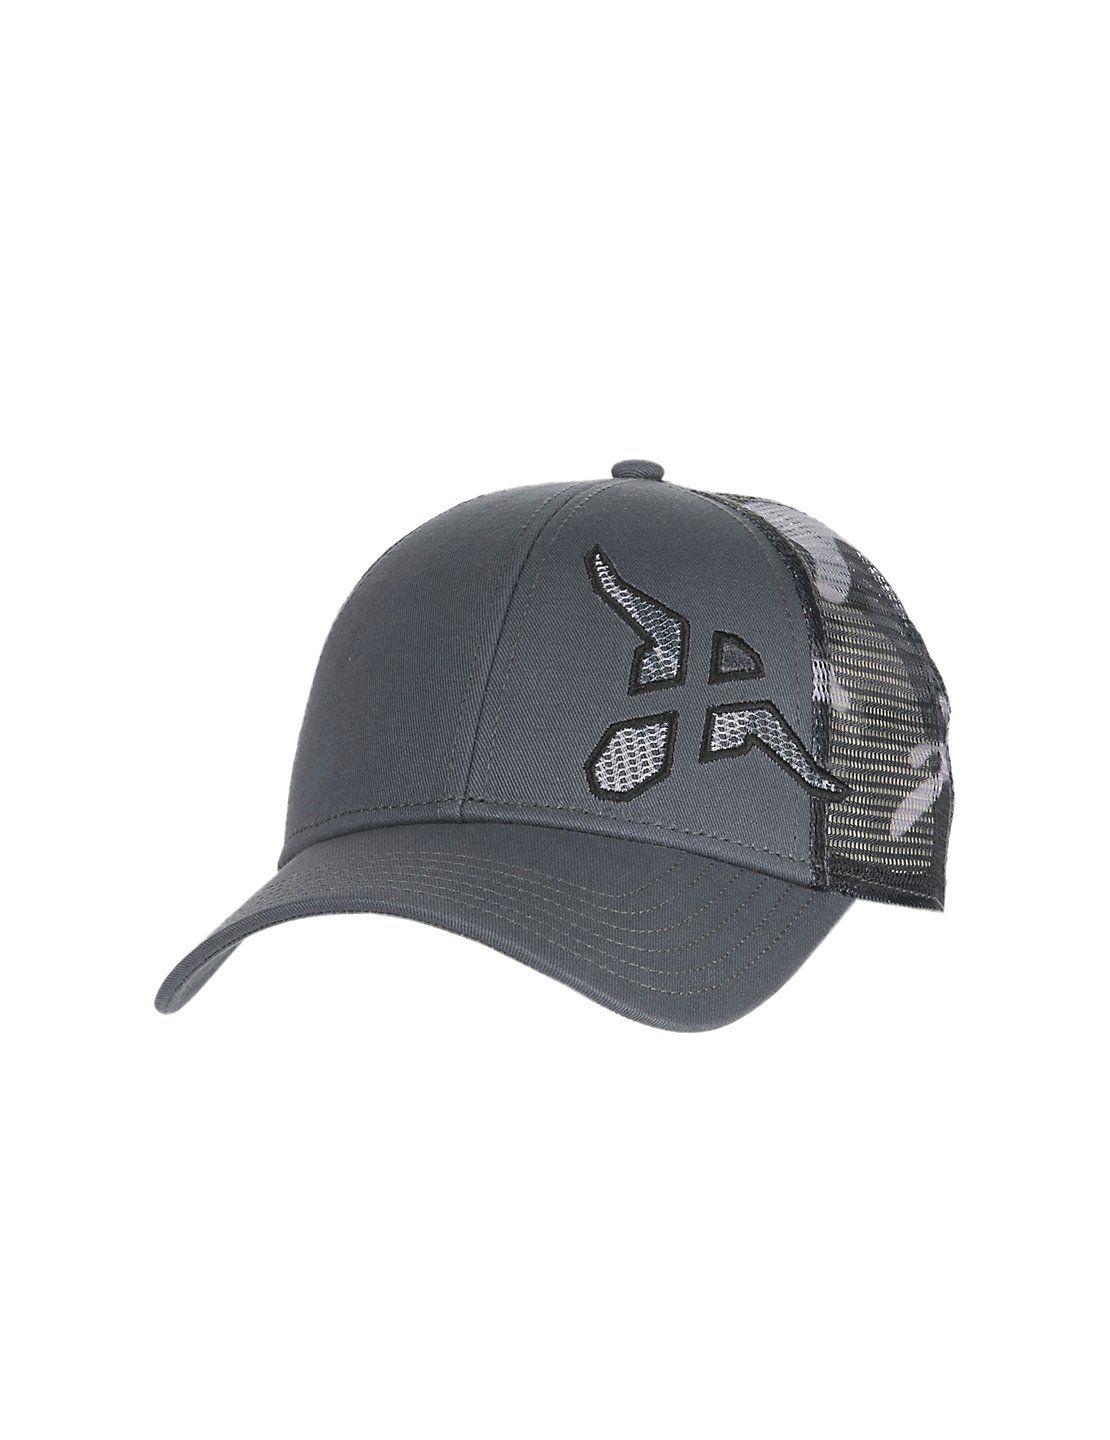 Grey and Green Ball Logo - Wrangler 20X Blue and Green Bull Logo Snap Back Cap | Cowboy Hats ...